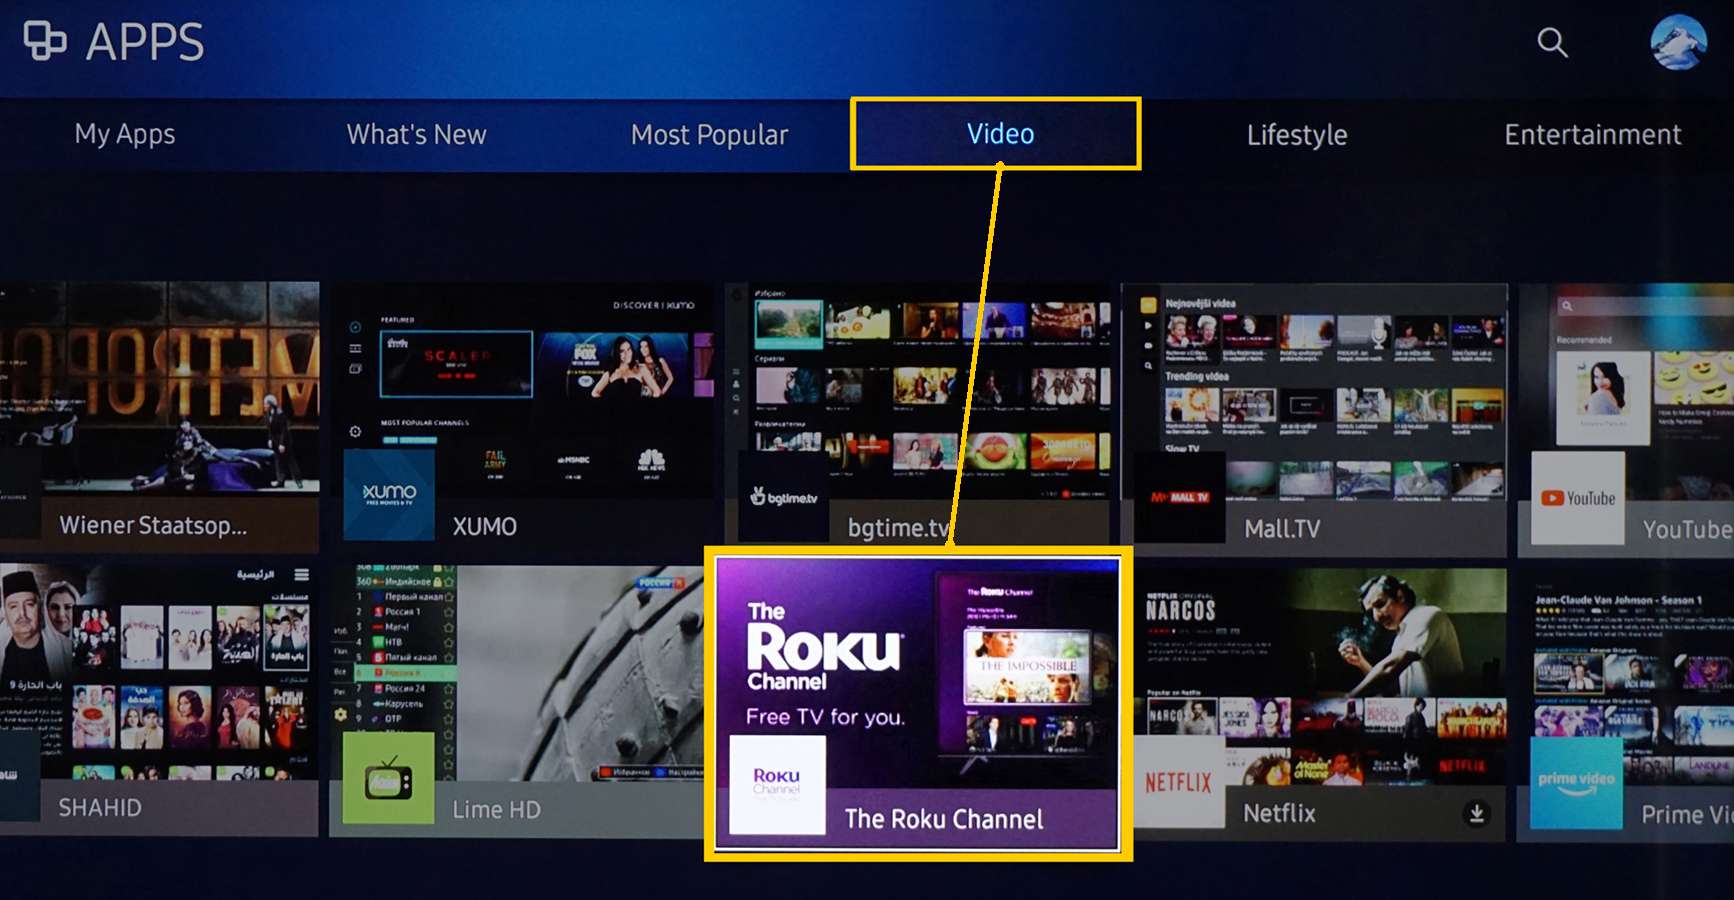 Samsung Smart TV-appar - Video - Roku-kanalen